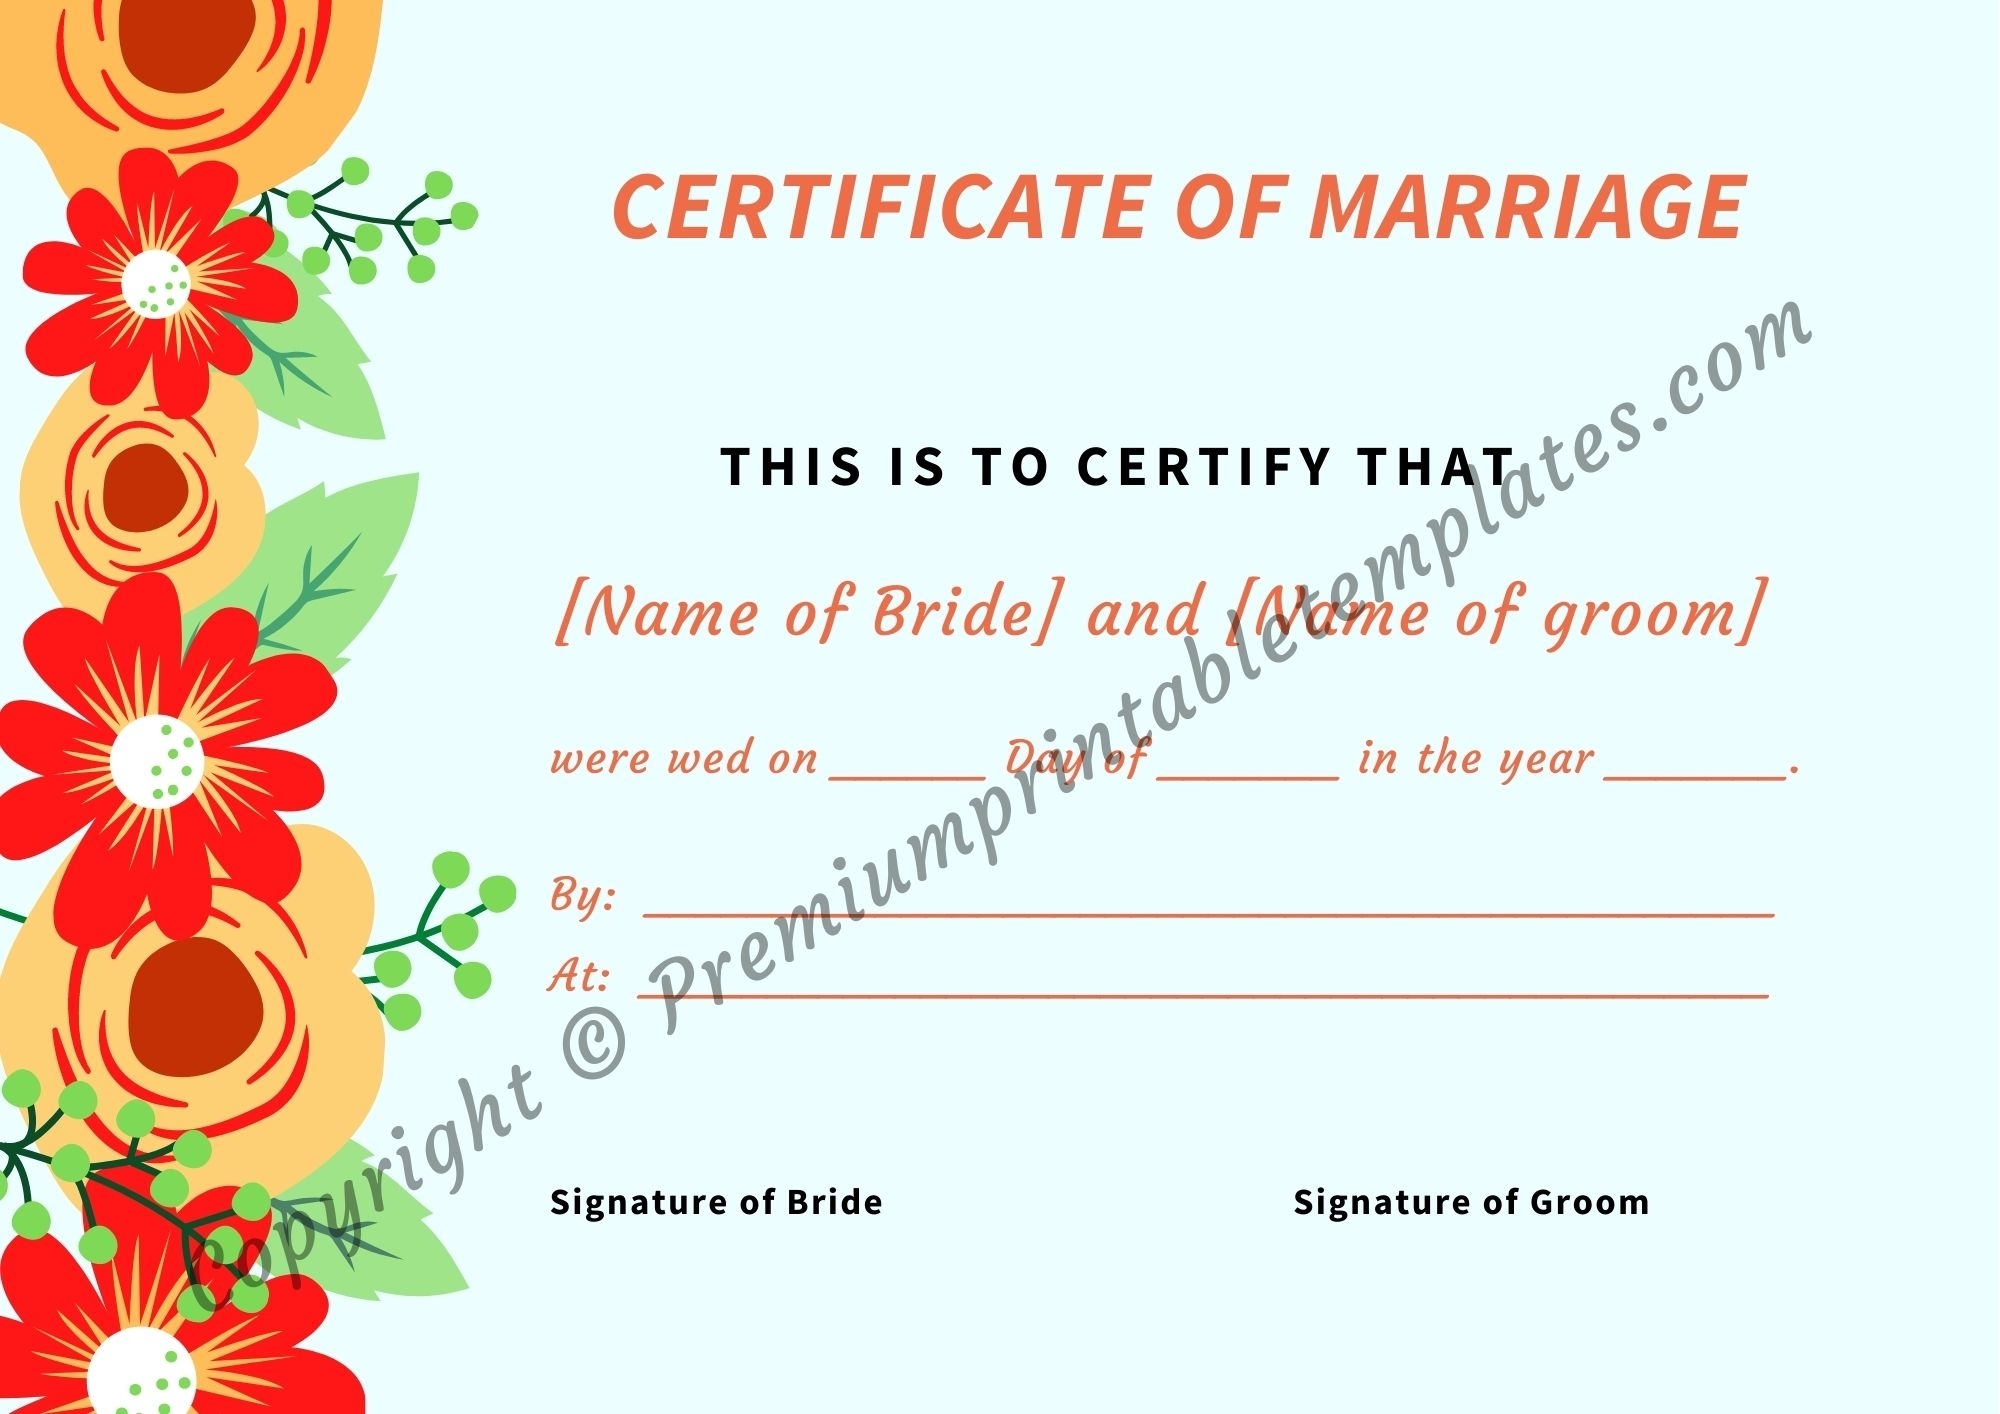 Marriage Certificate Printable Template Pdf & Editable Word [Pack Of 5] Regarding Certificate Of Marriage Template